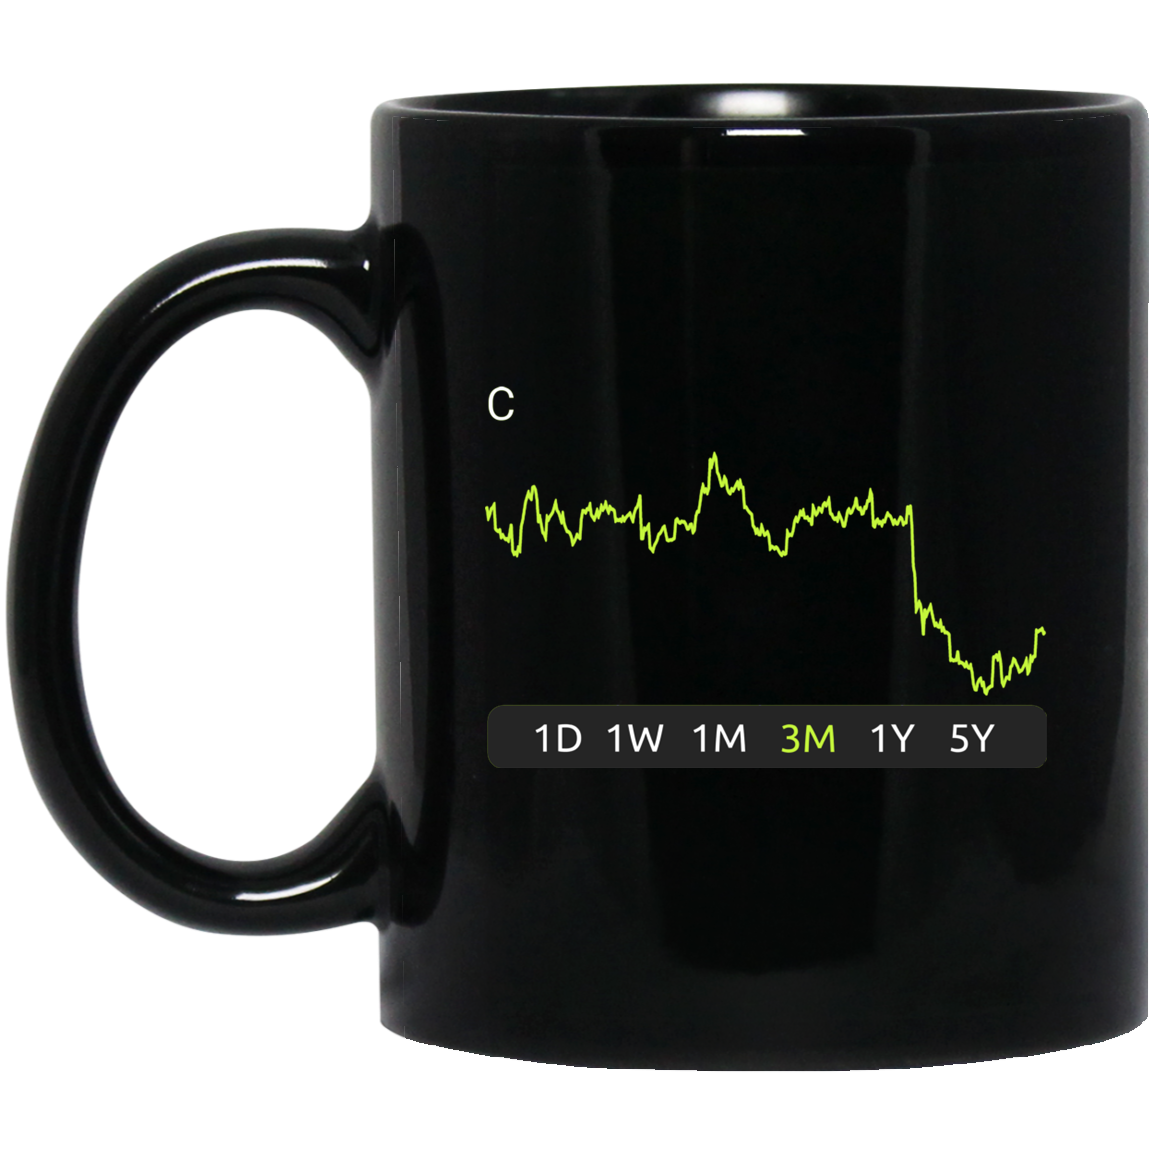 C Stock 3m Mug